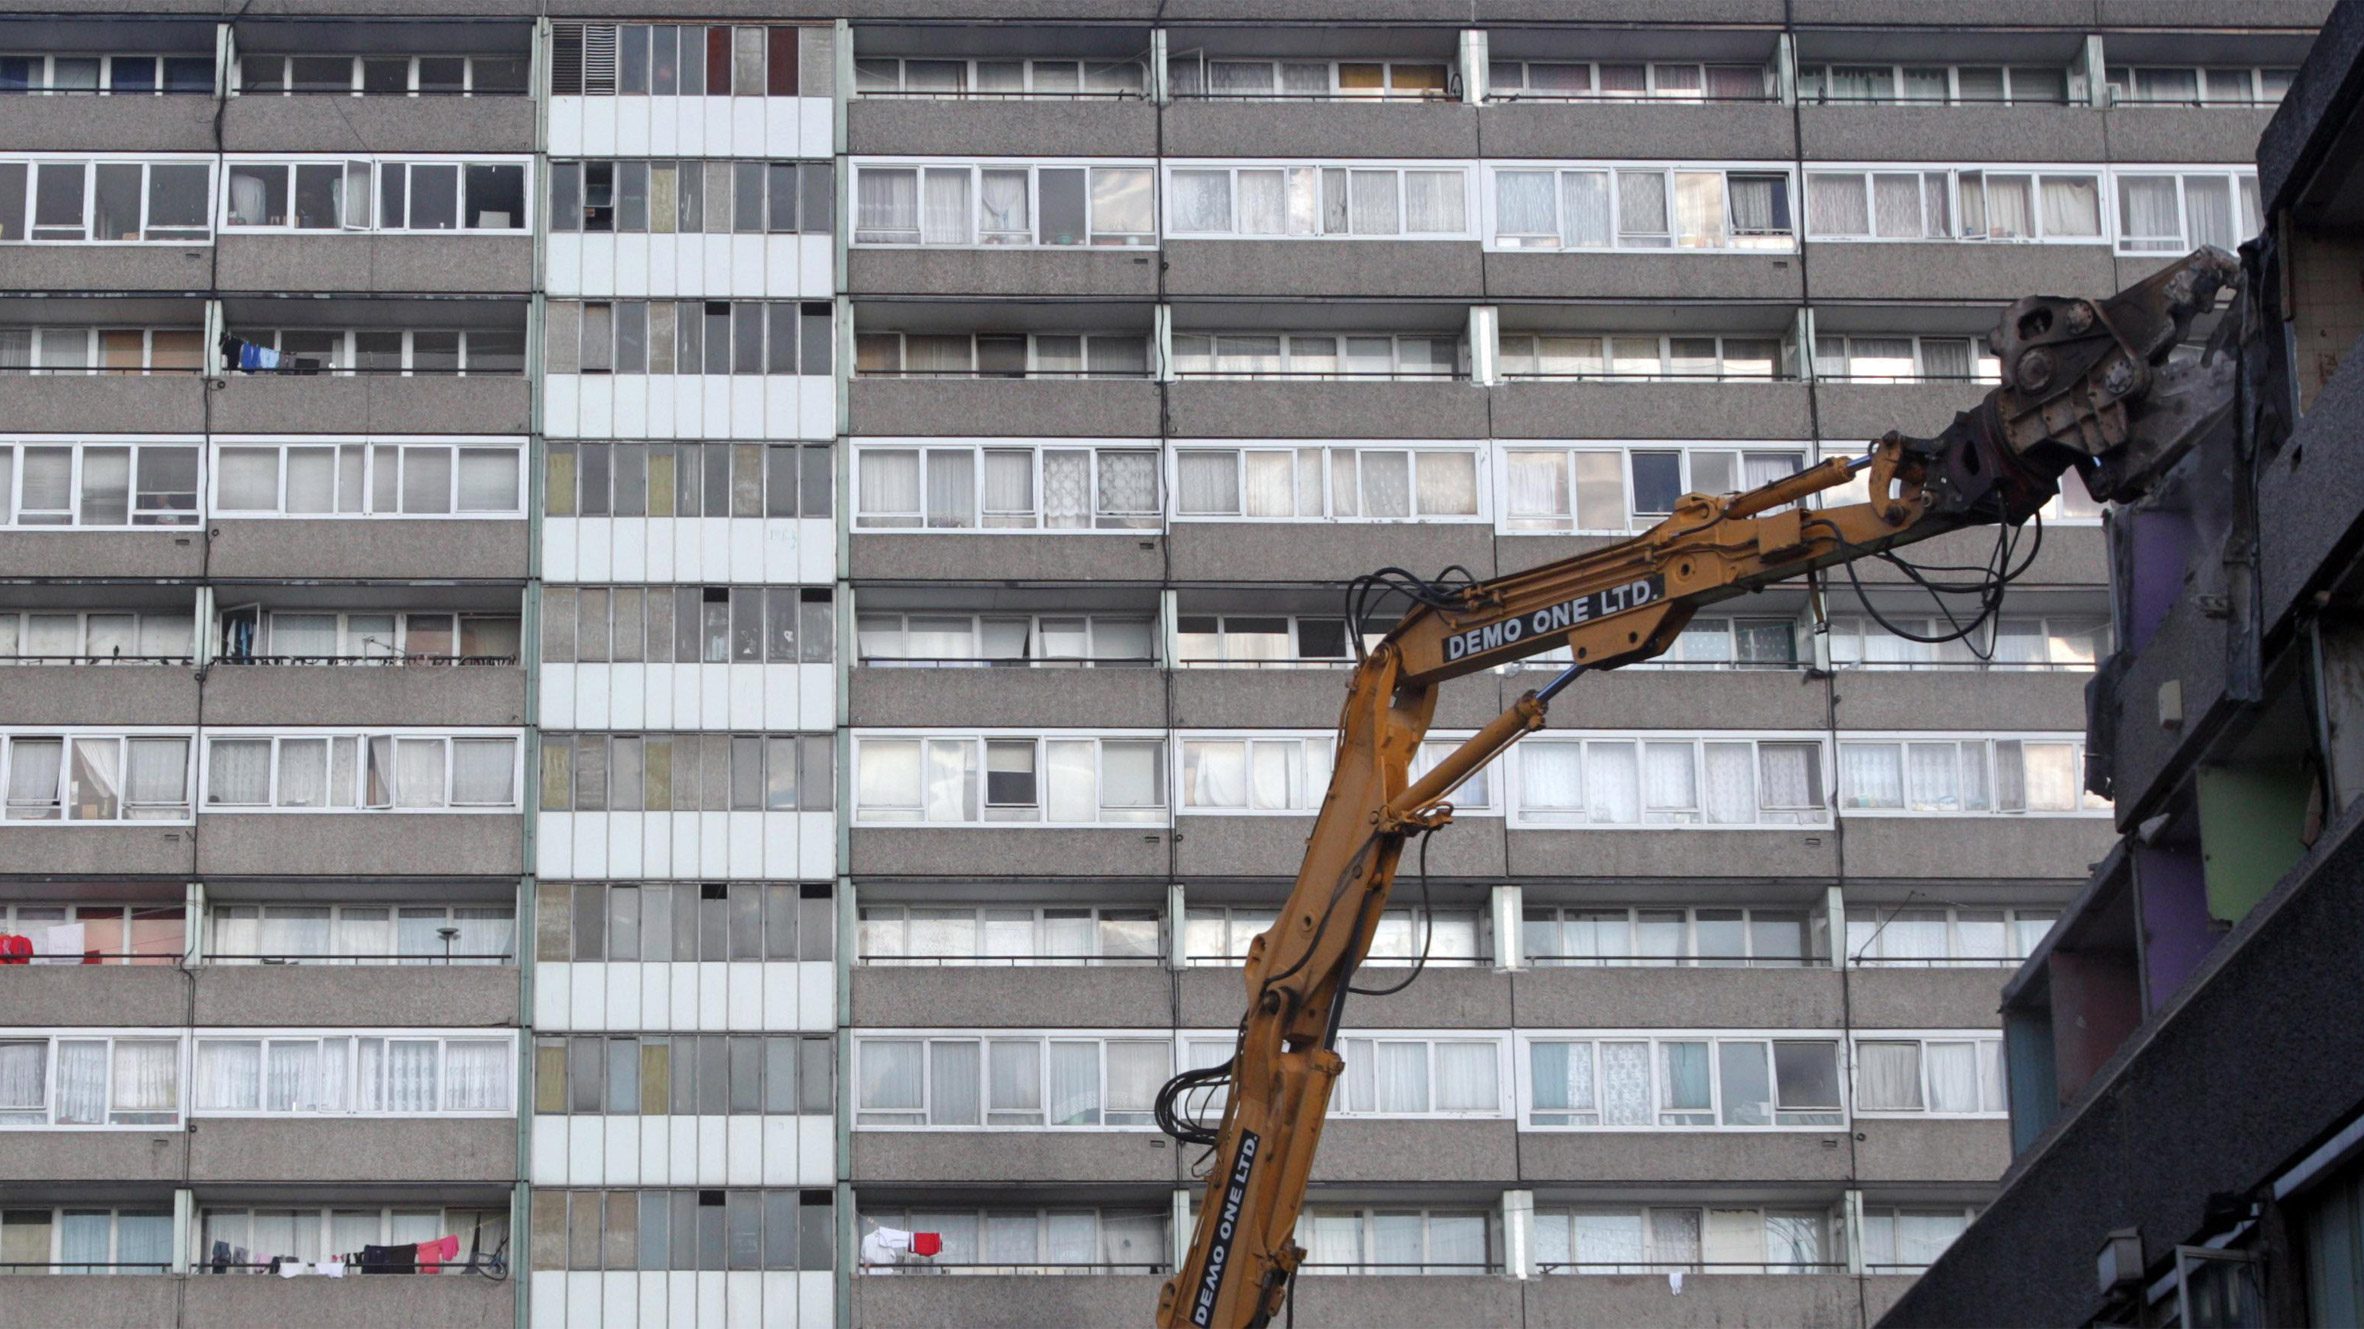 A crane tearing down buildings on the Aylesbury Estate in London